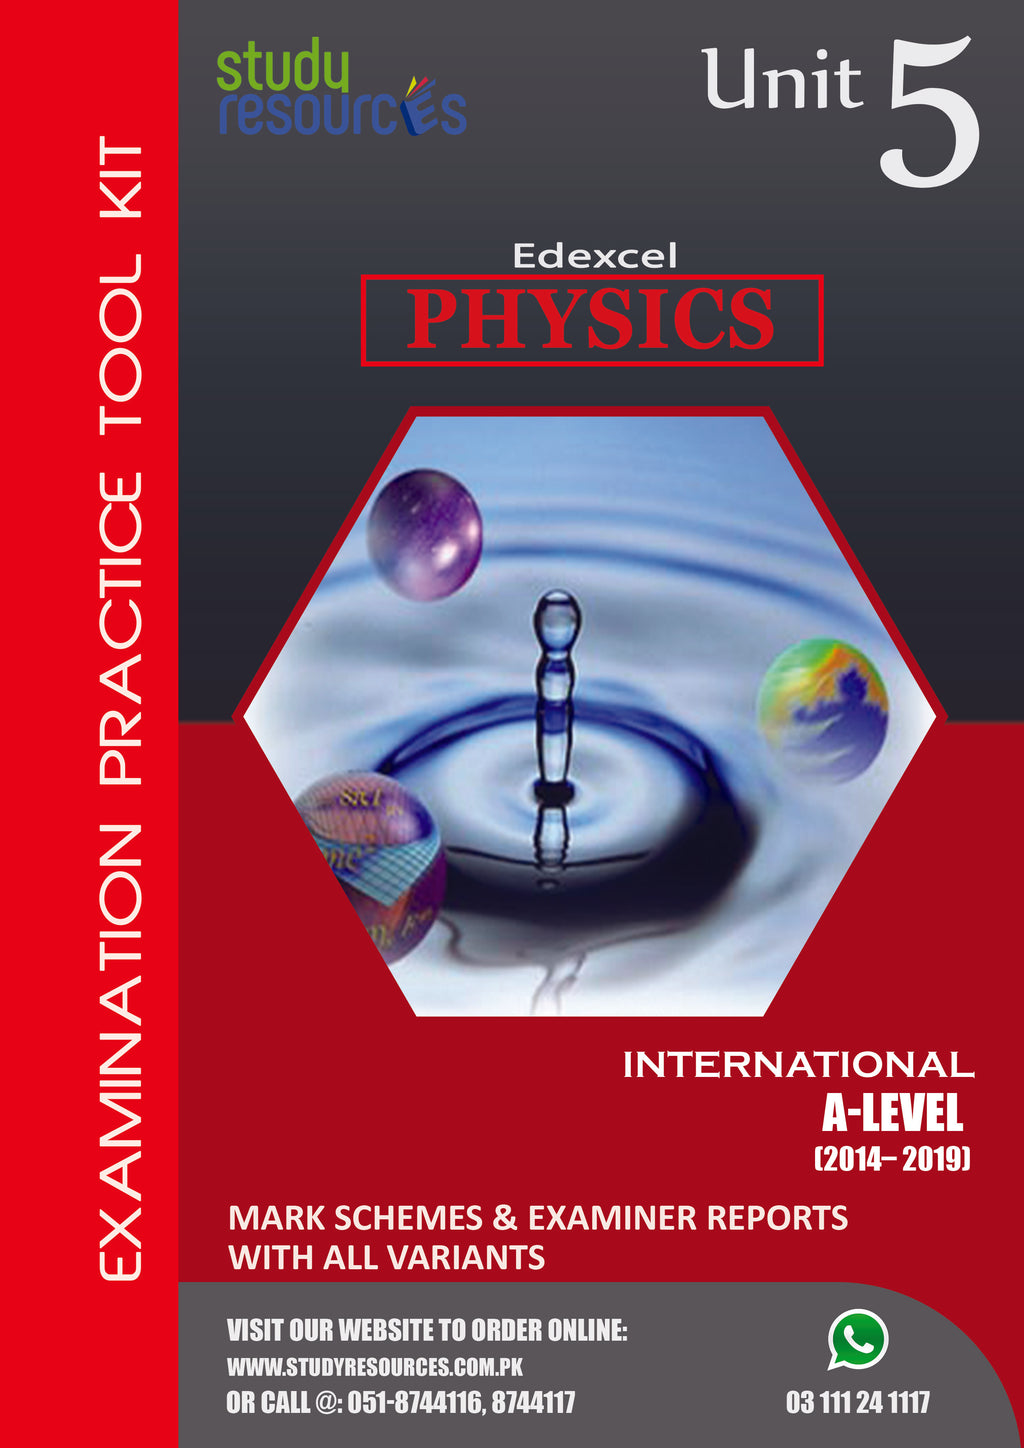 Edexcel A-Level Physics U-5 Past Papers (2014-2019)